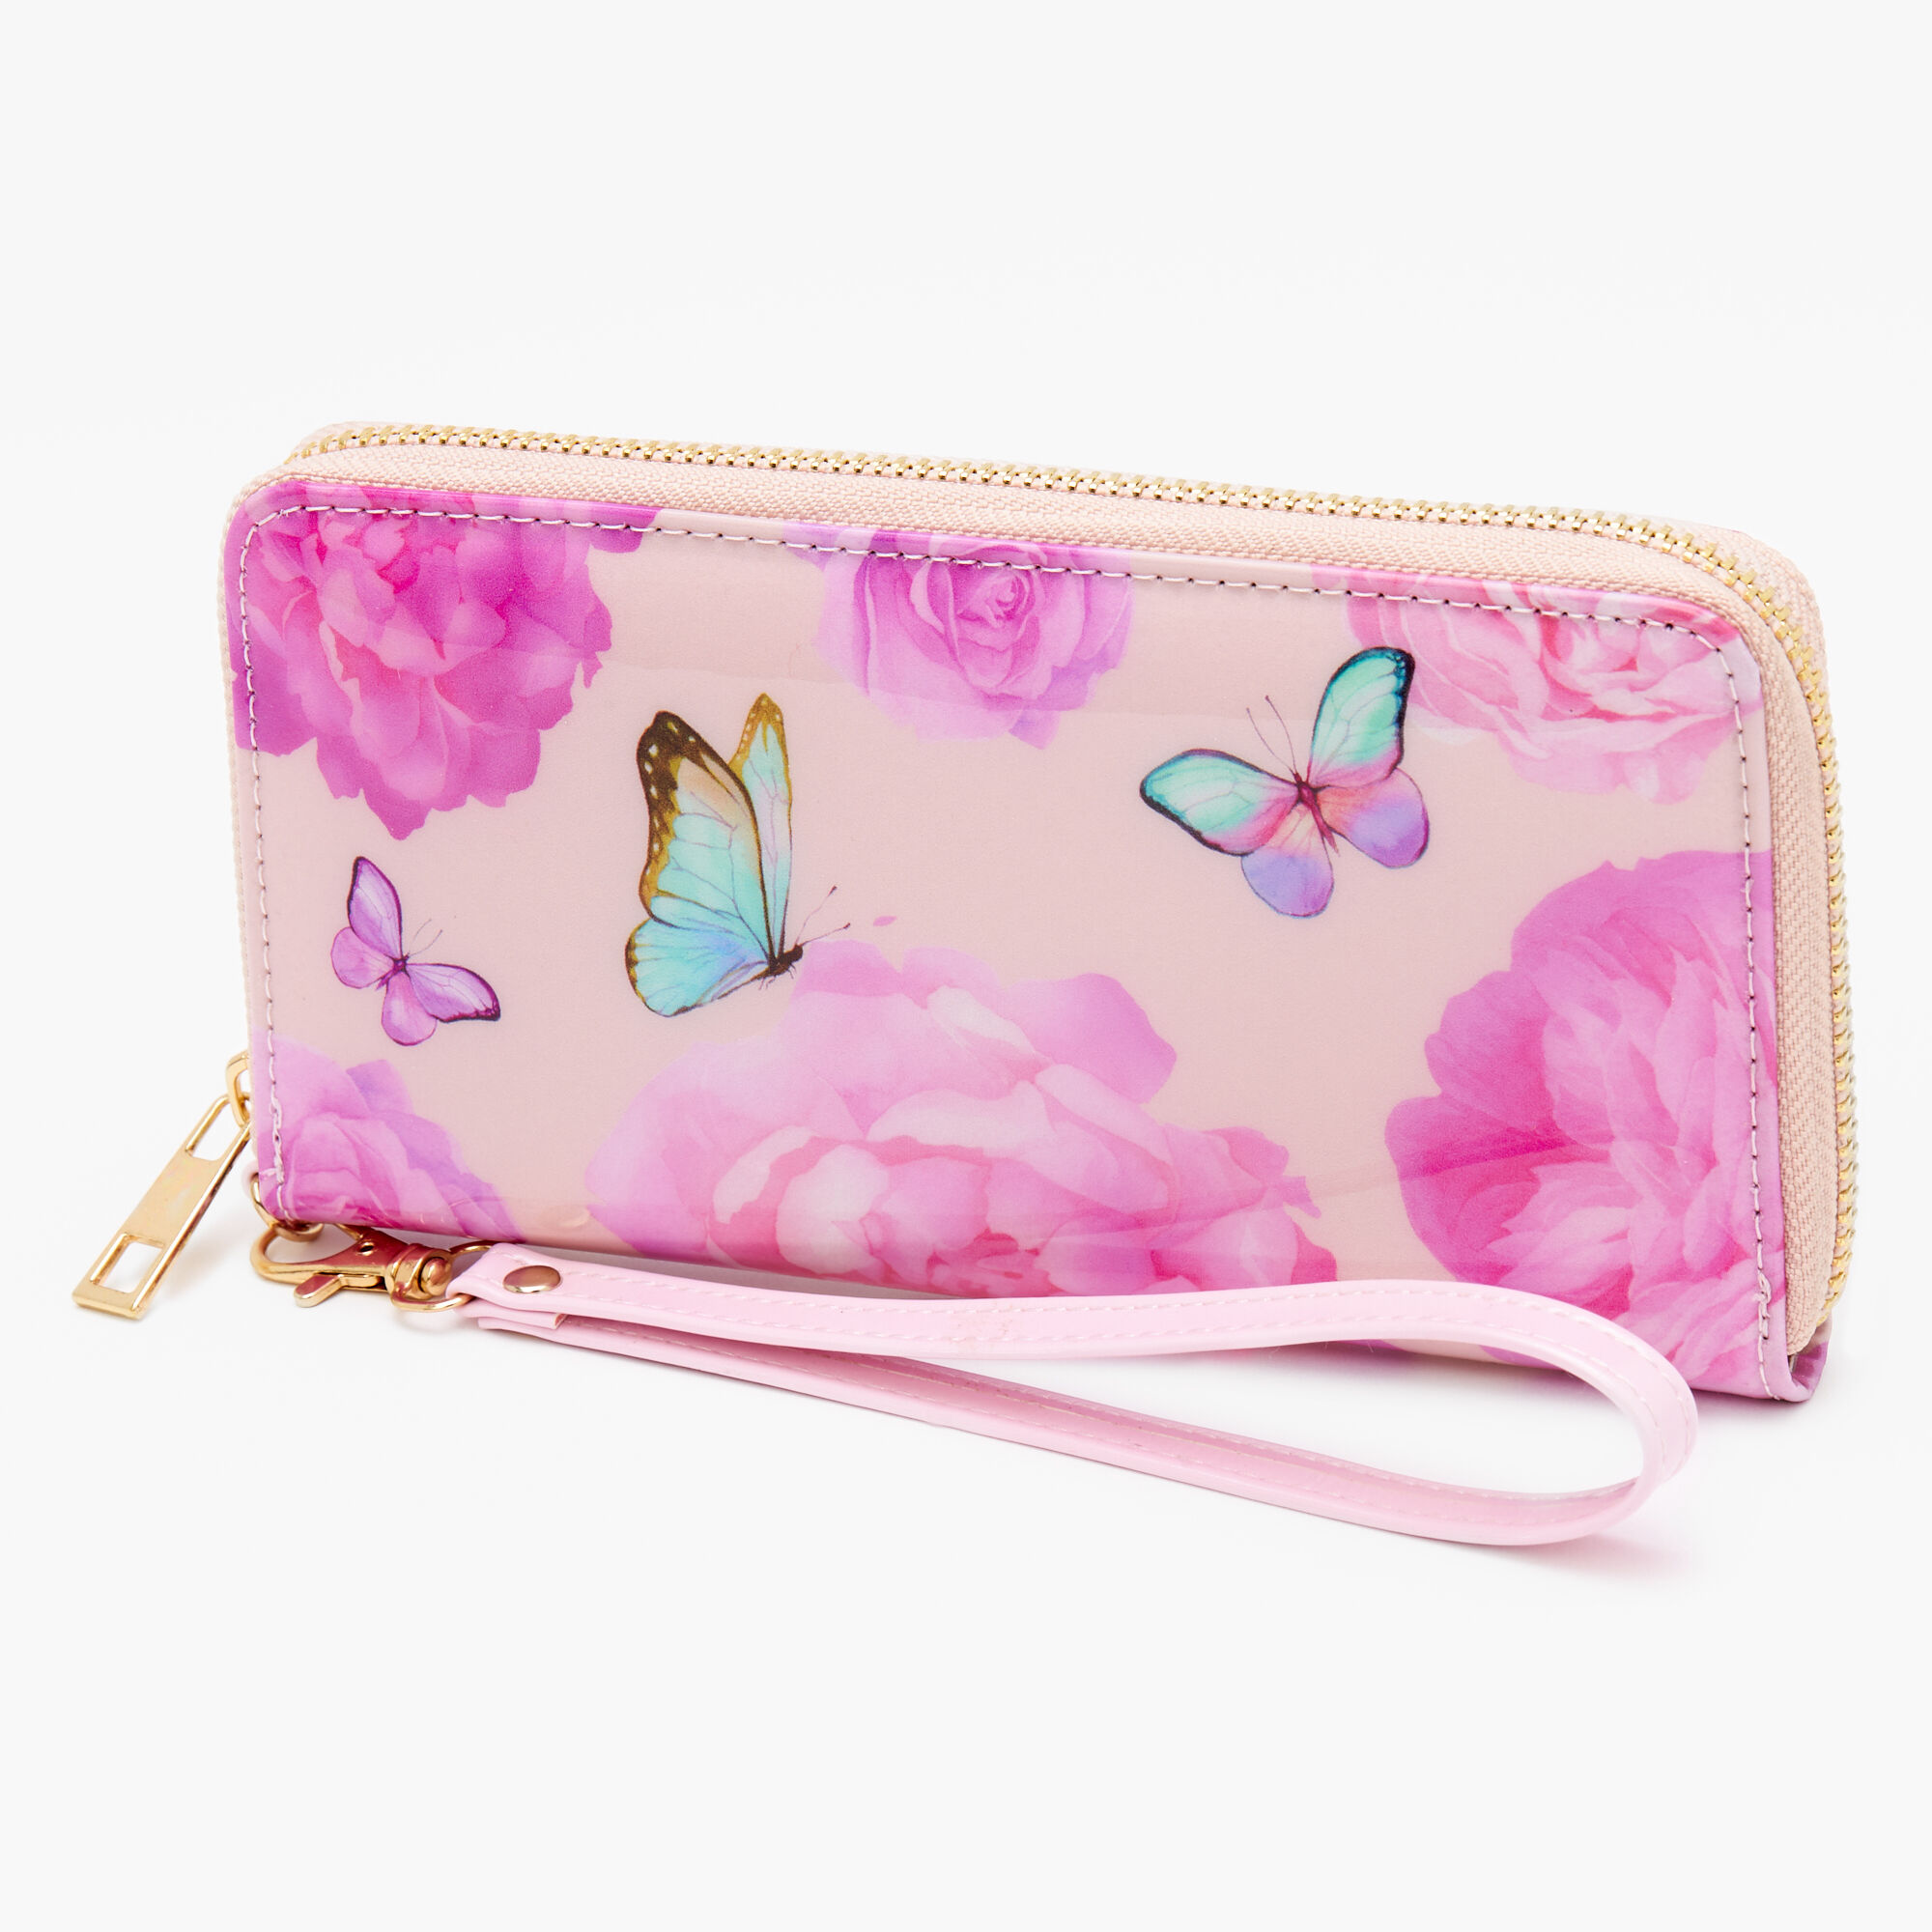 Coach purse with butterflies 🦋 | Coach purses, Purses, Coach